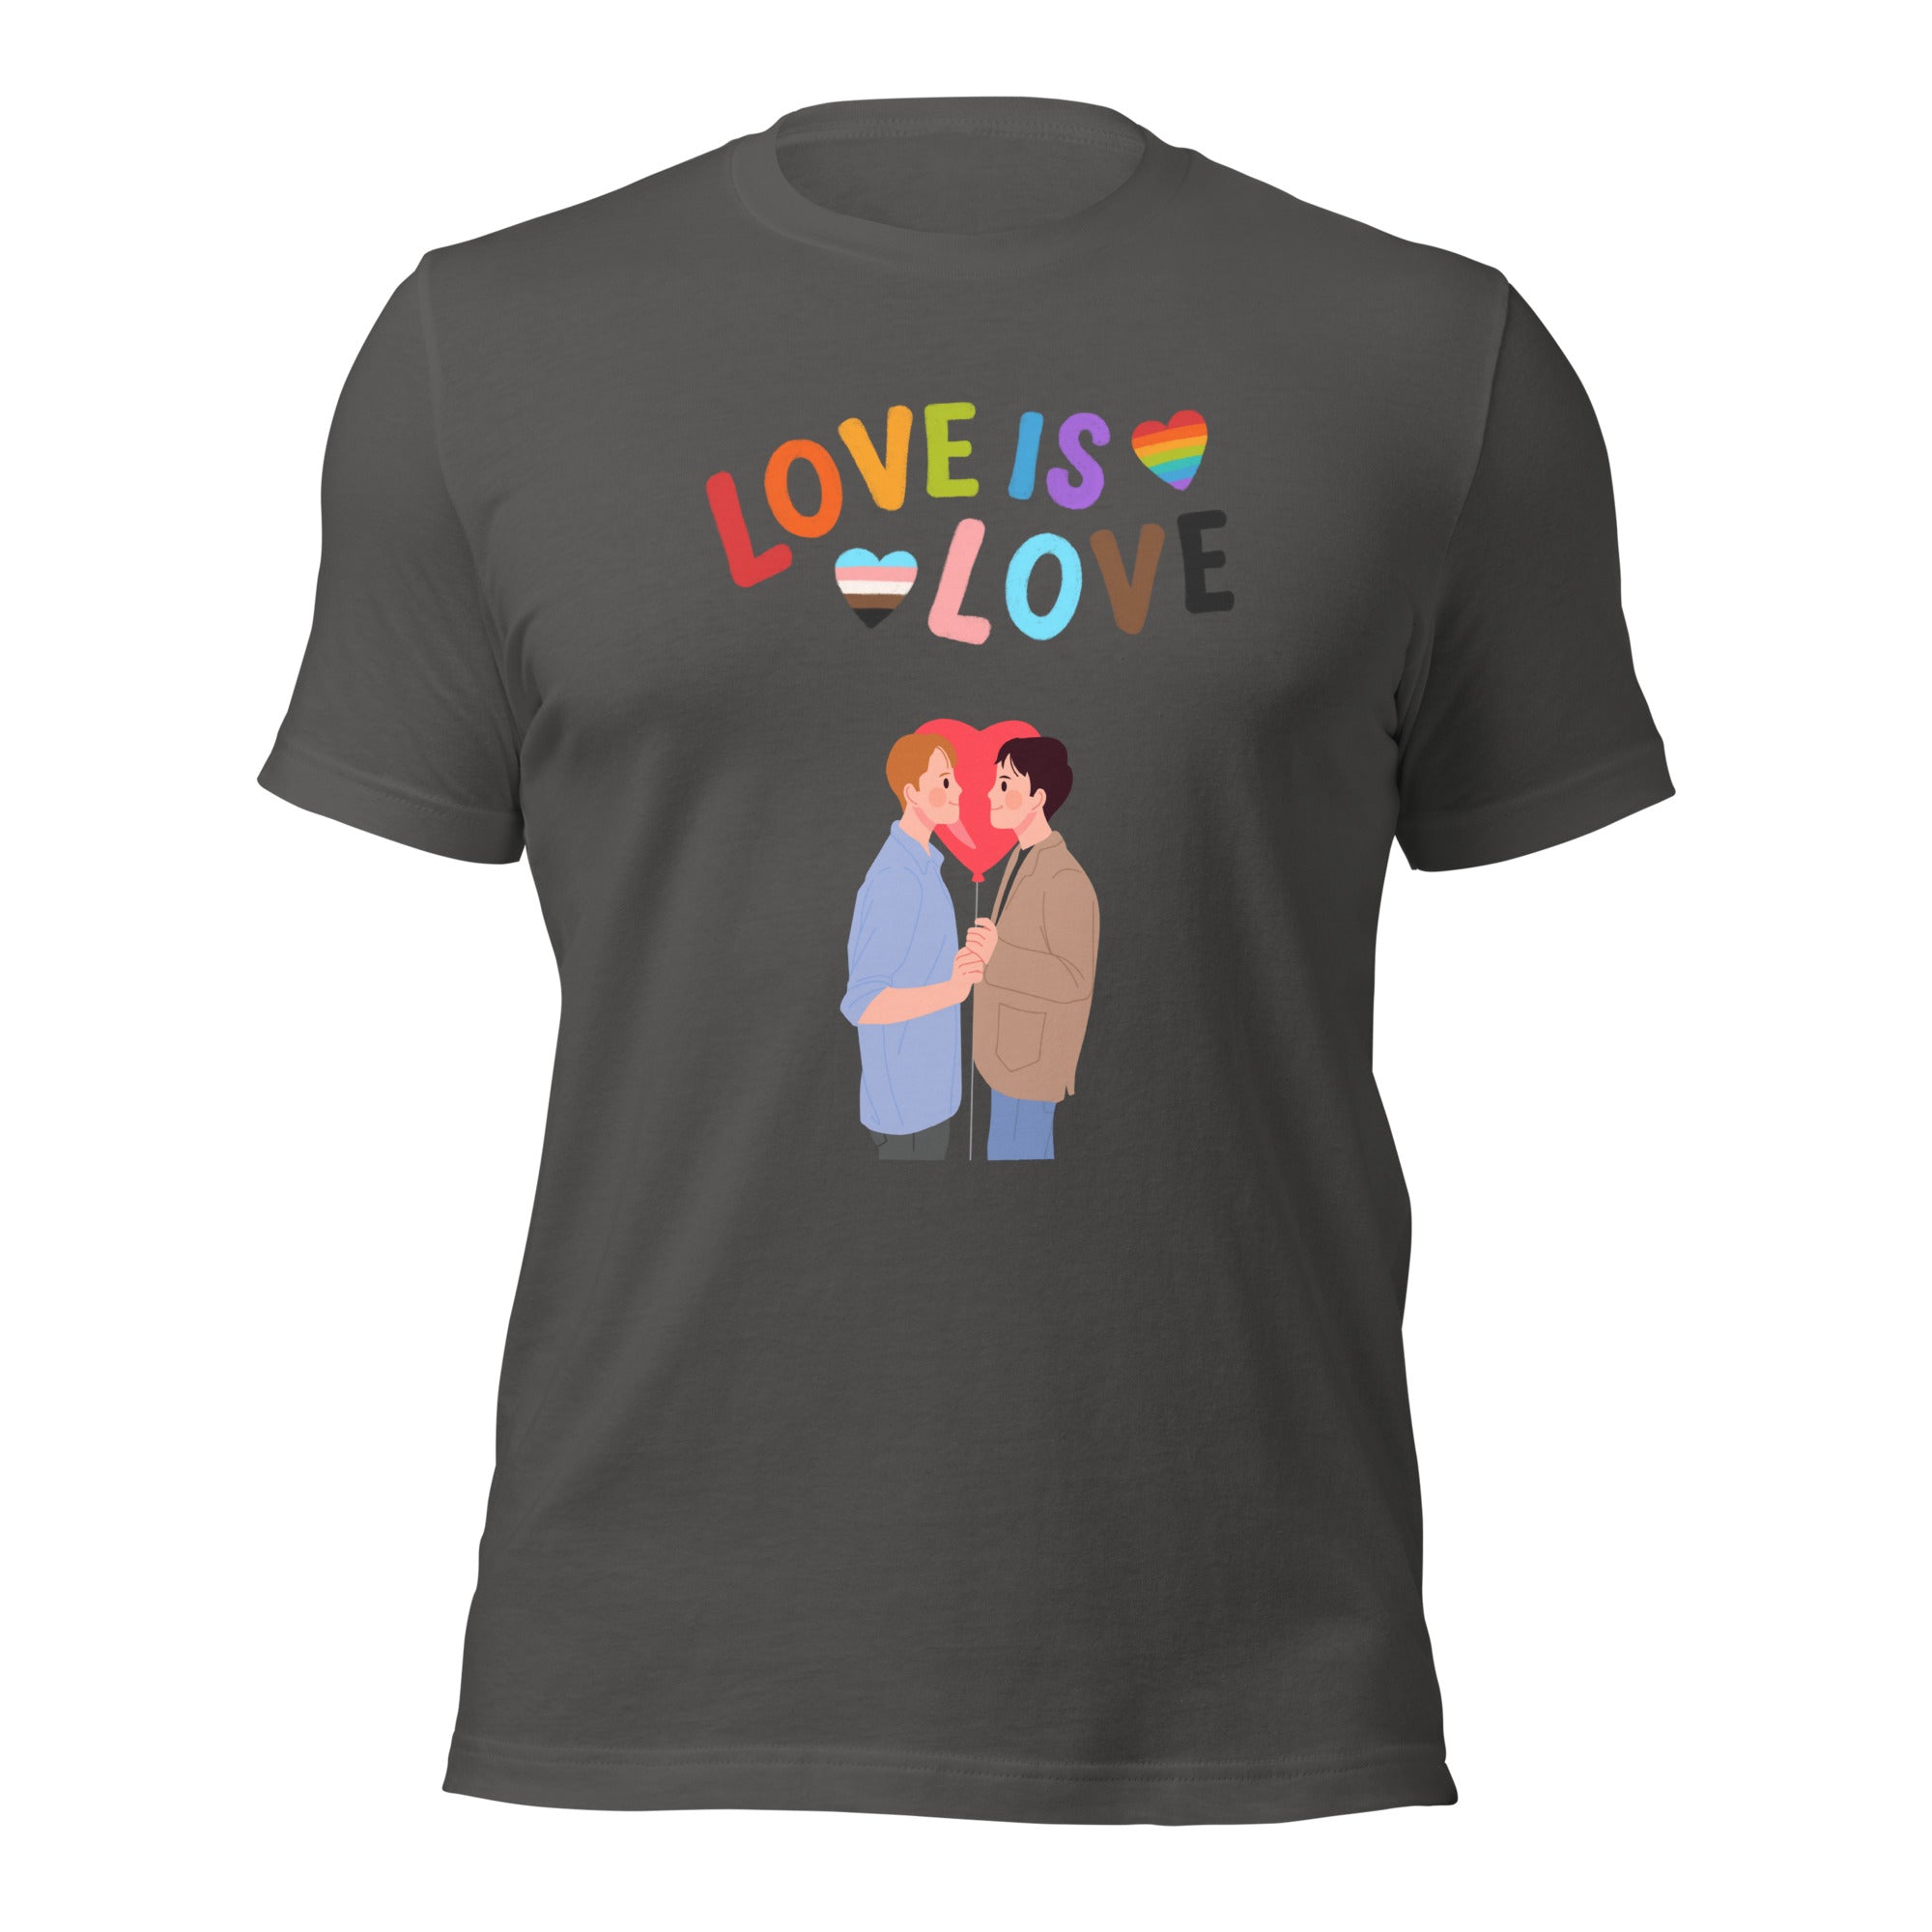 Love is Love - Unisex T-Shirt